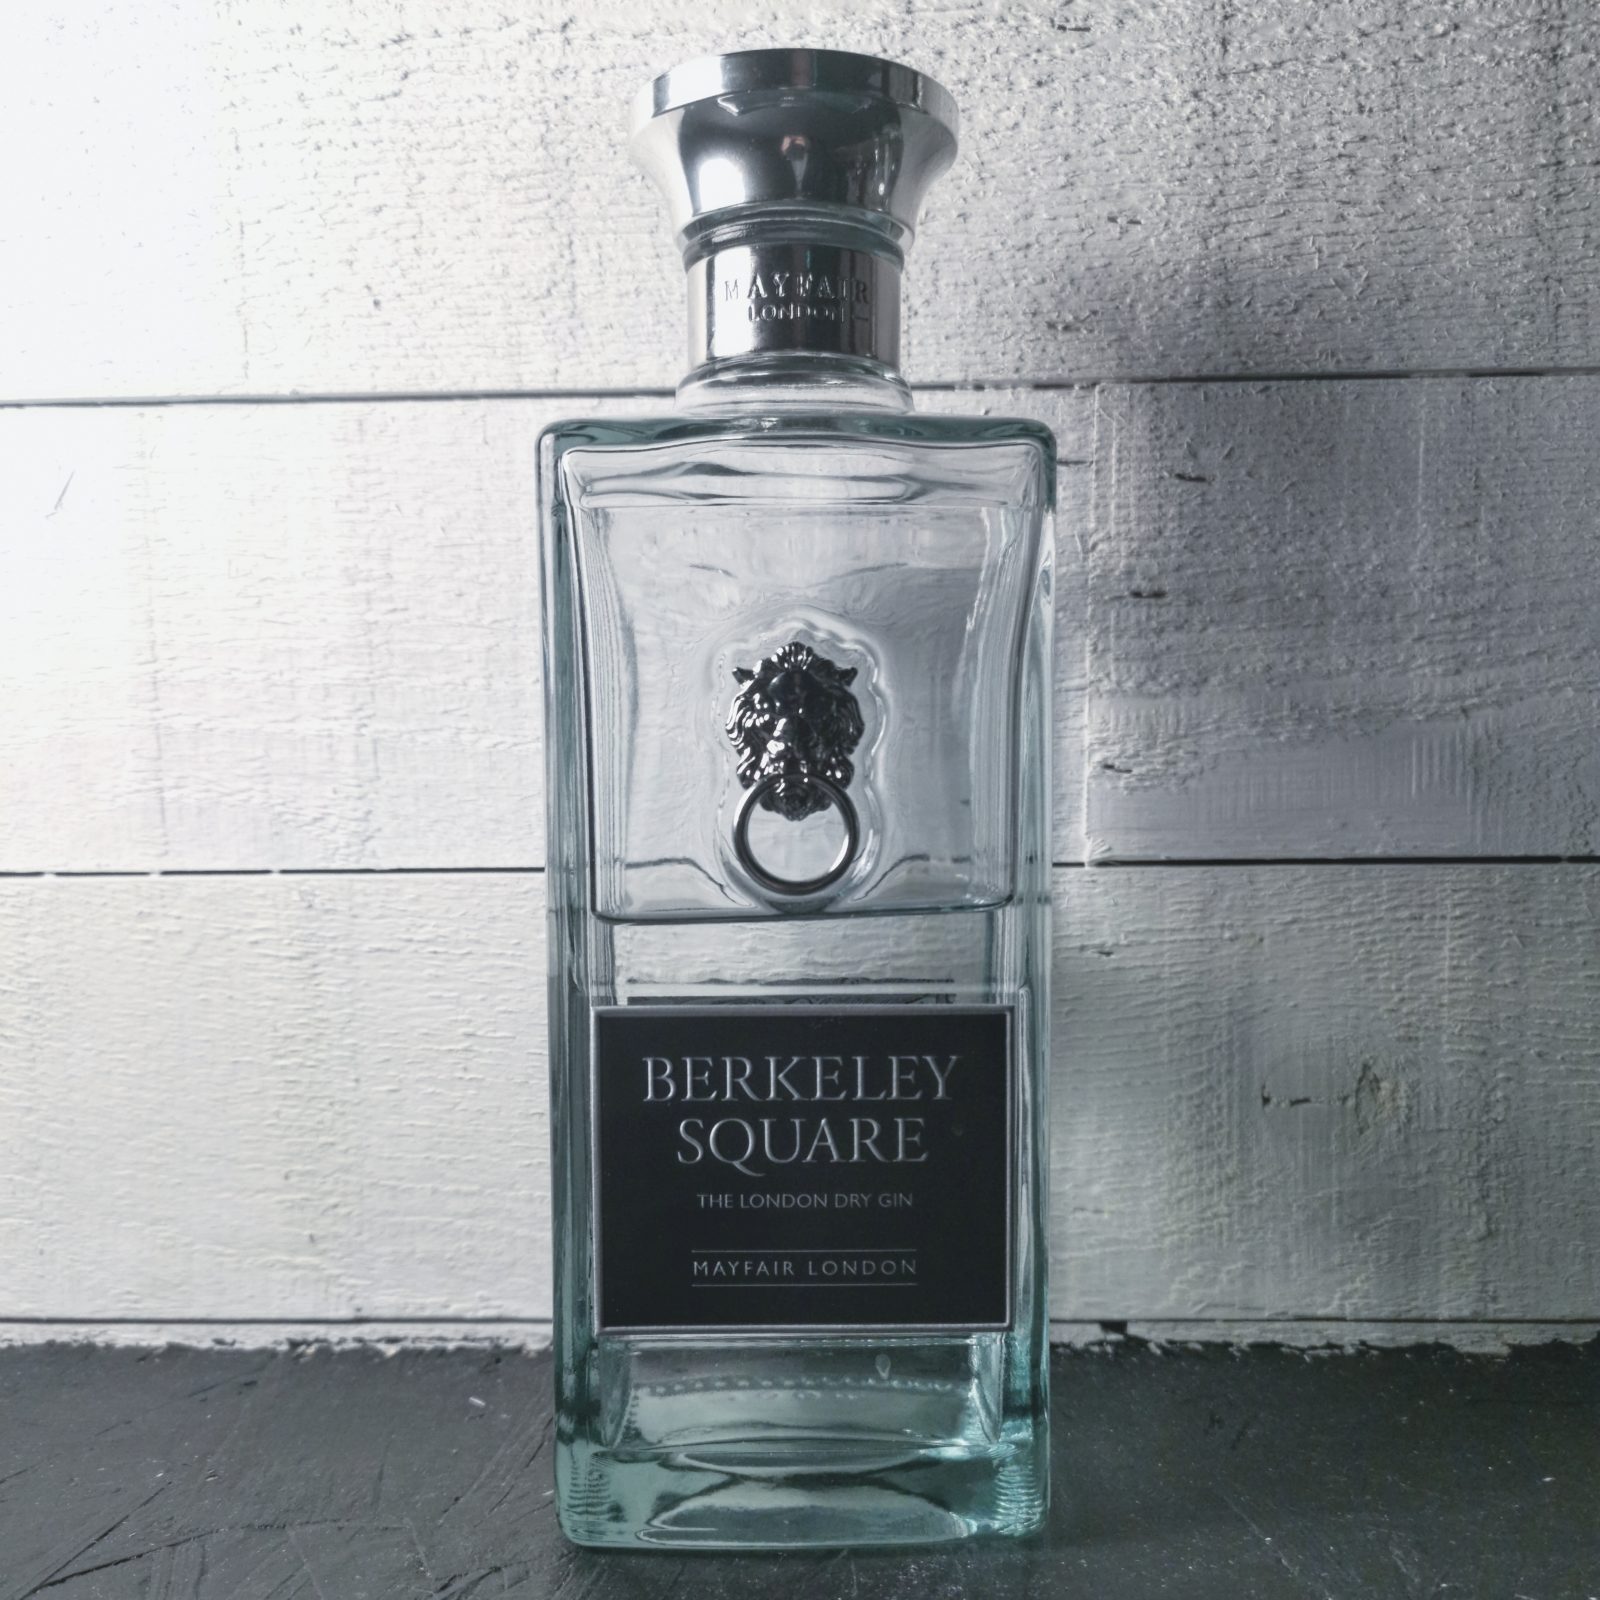 Berkeley Square Gin bottle